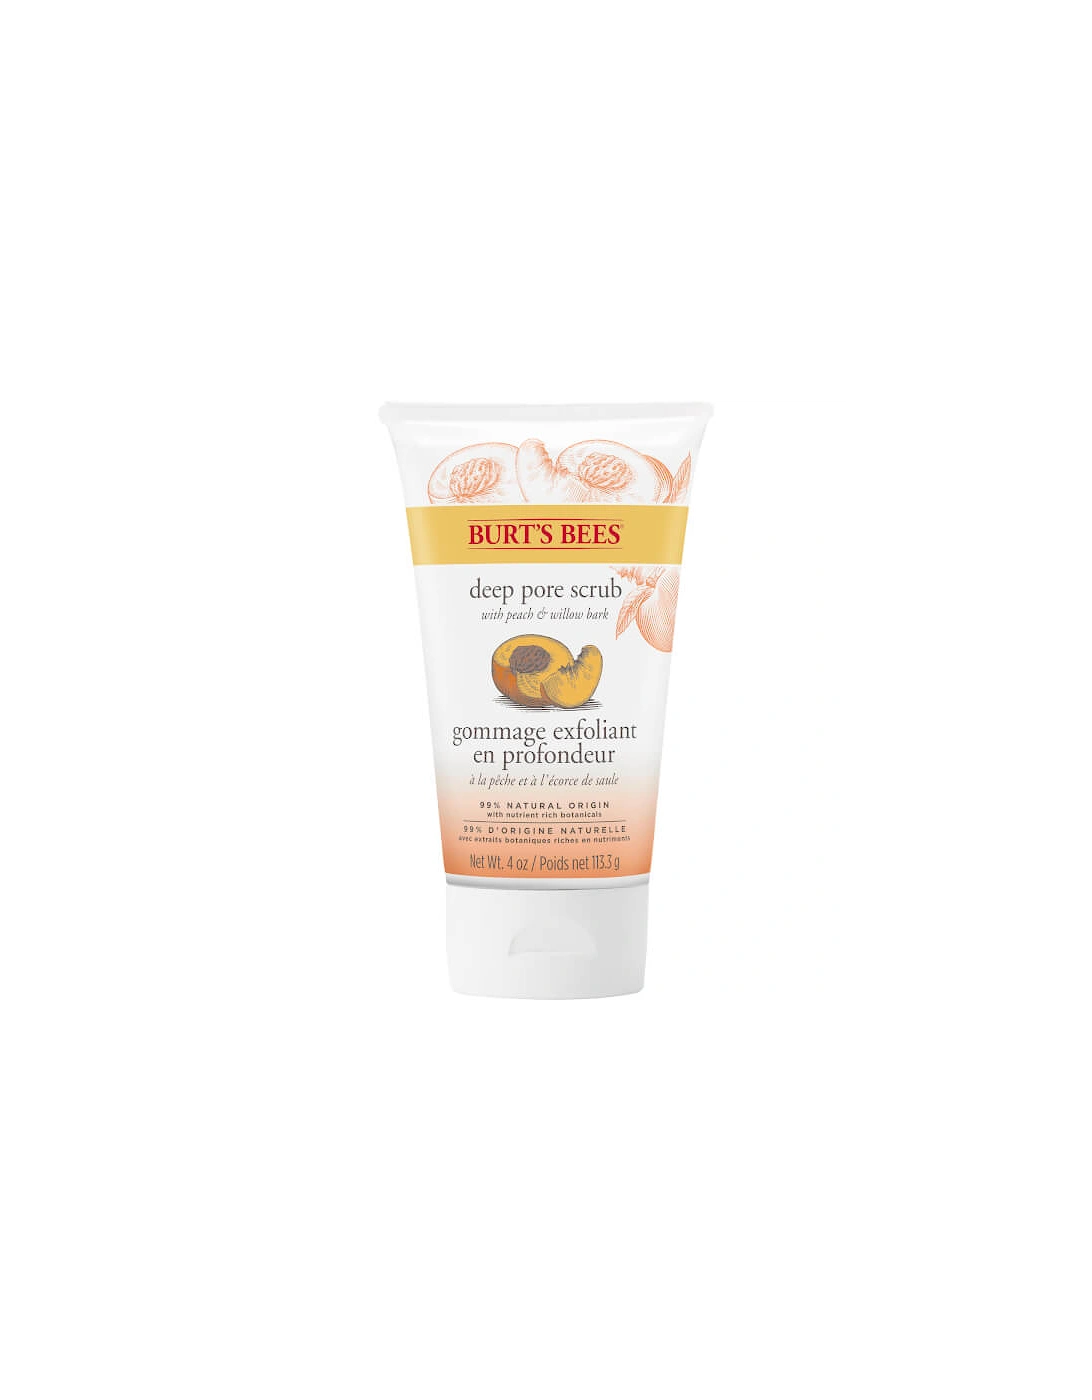 Peach & Willowbark Deep Pore Scrub (4 oz / 110g) - Burt's Bees, 2 of 1